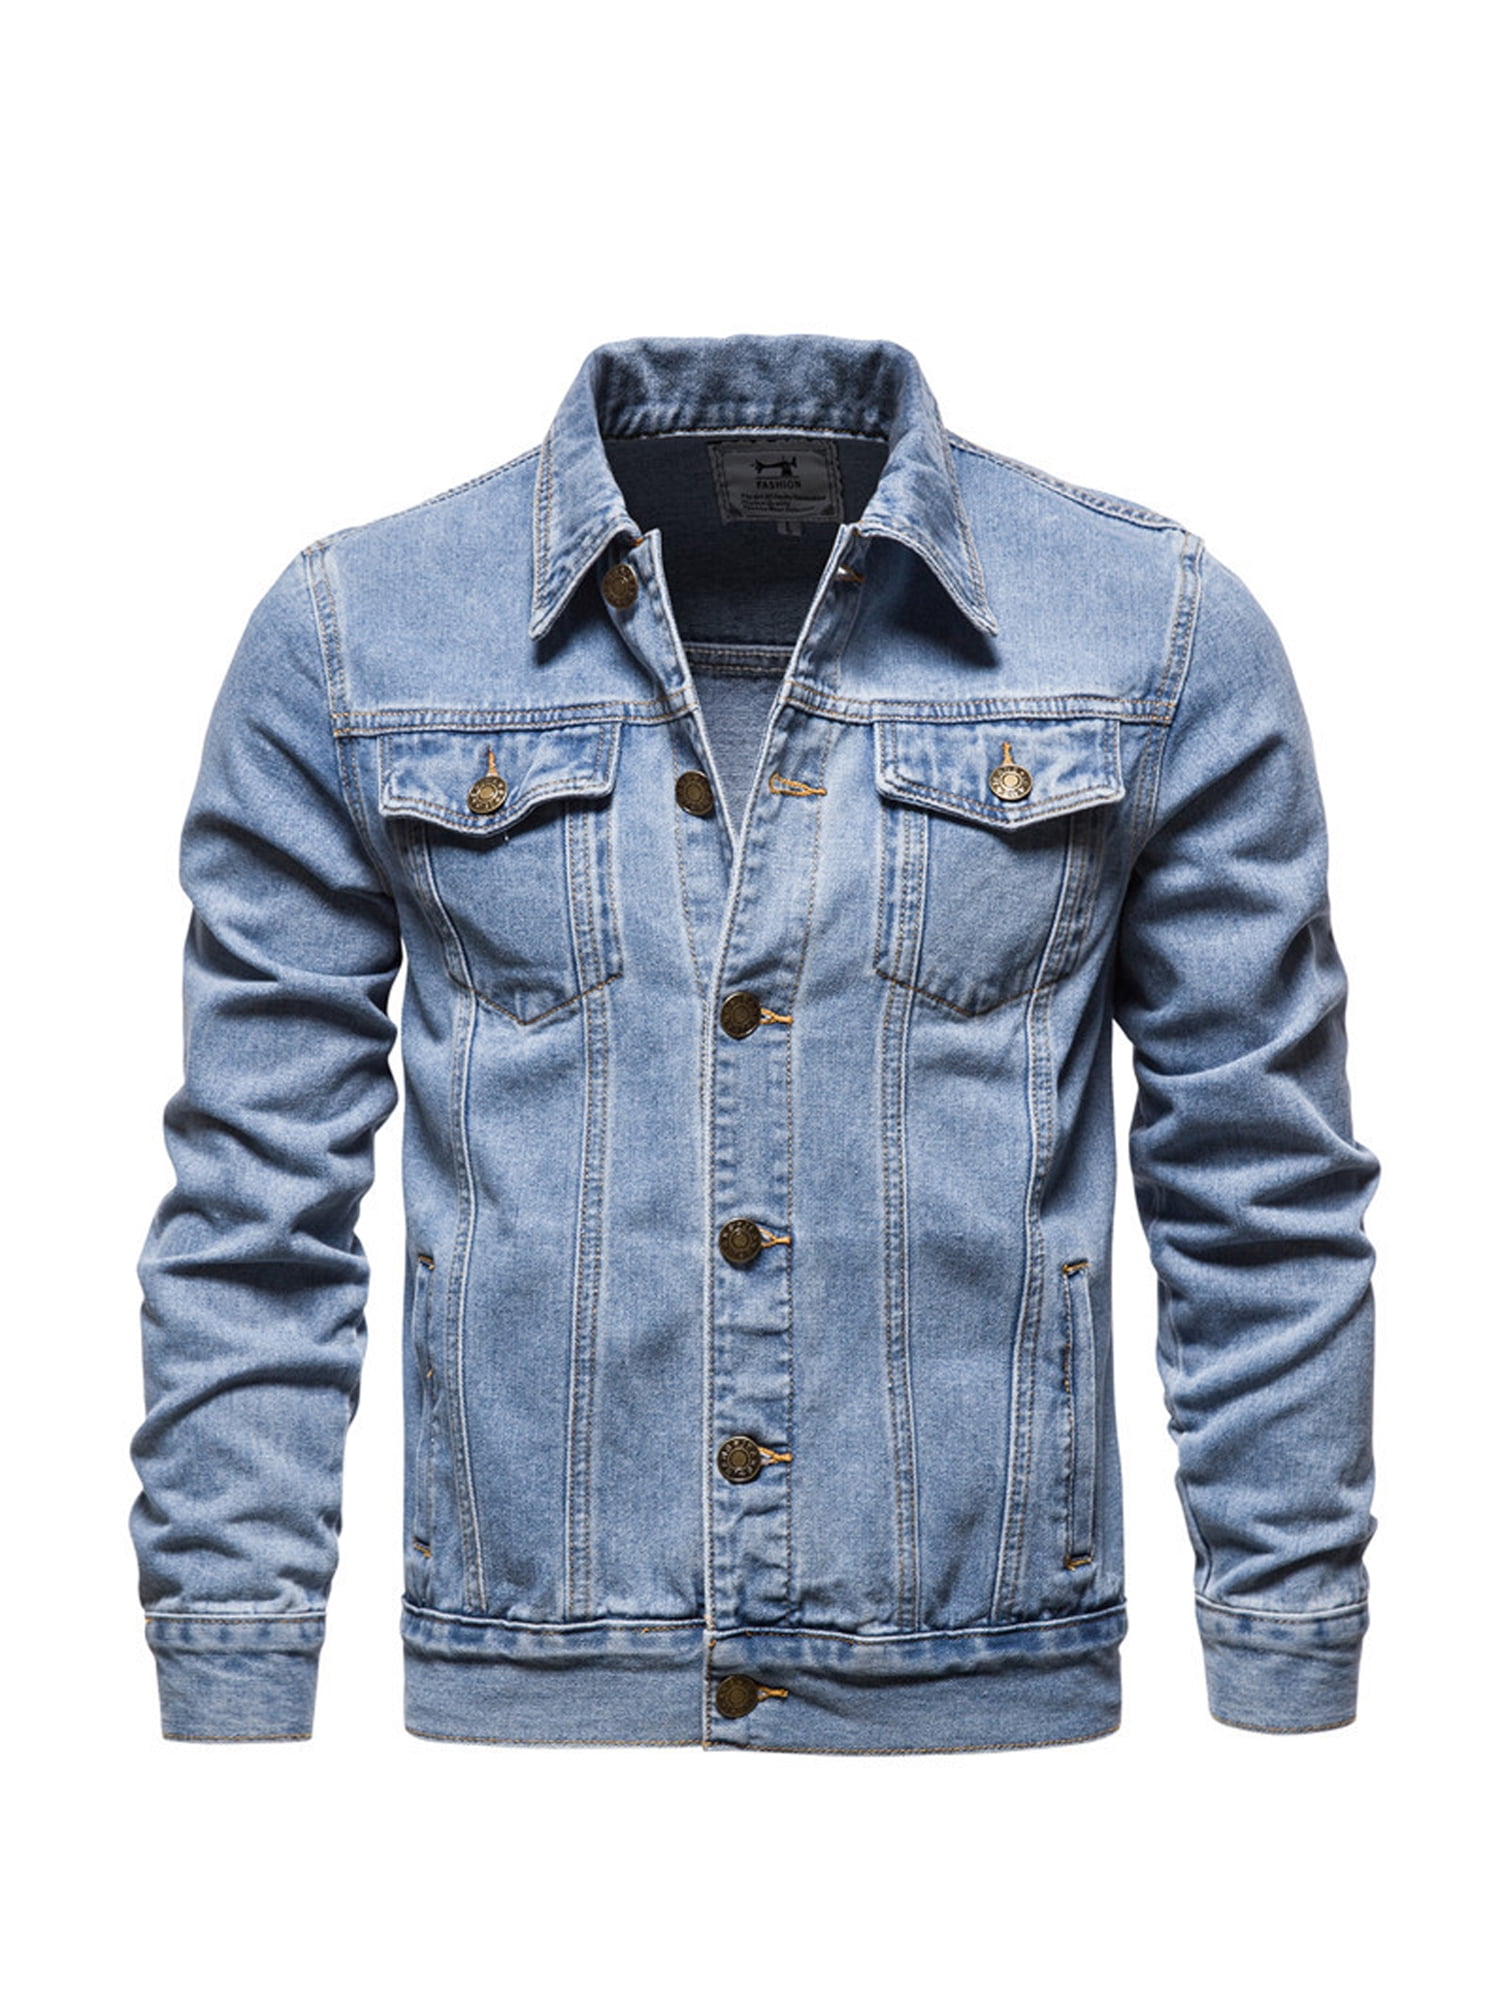 New Men's slim denim jackets coat washed retro jean jacket Spring couple coat